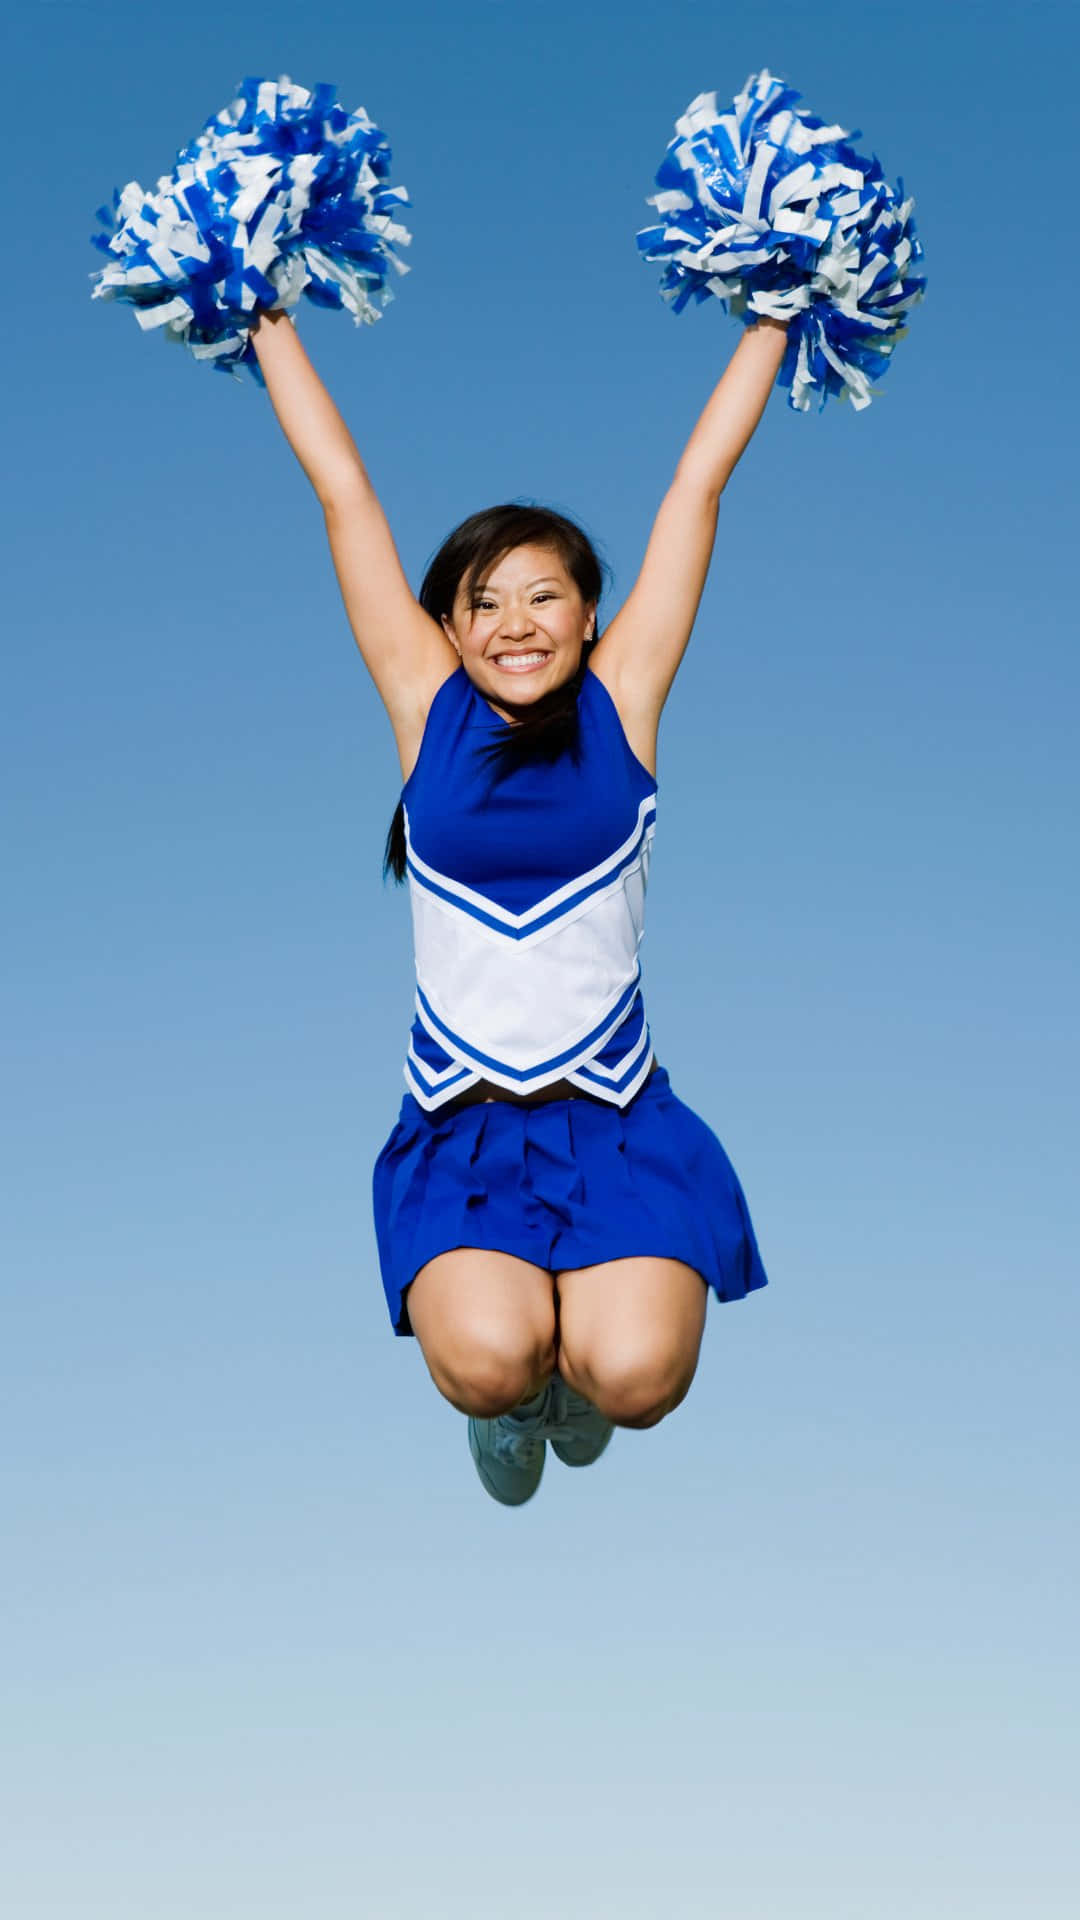 Cheerleader Jumping With Pom Poms Wallpaper